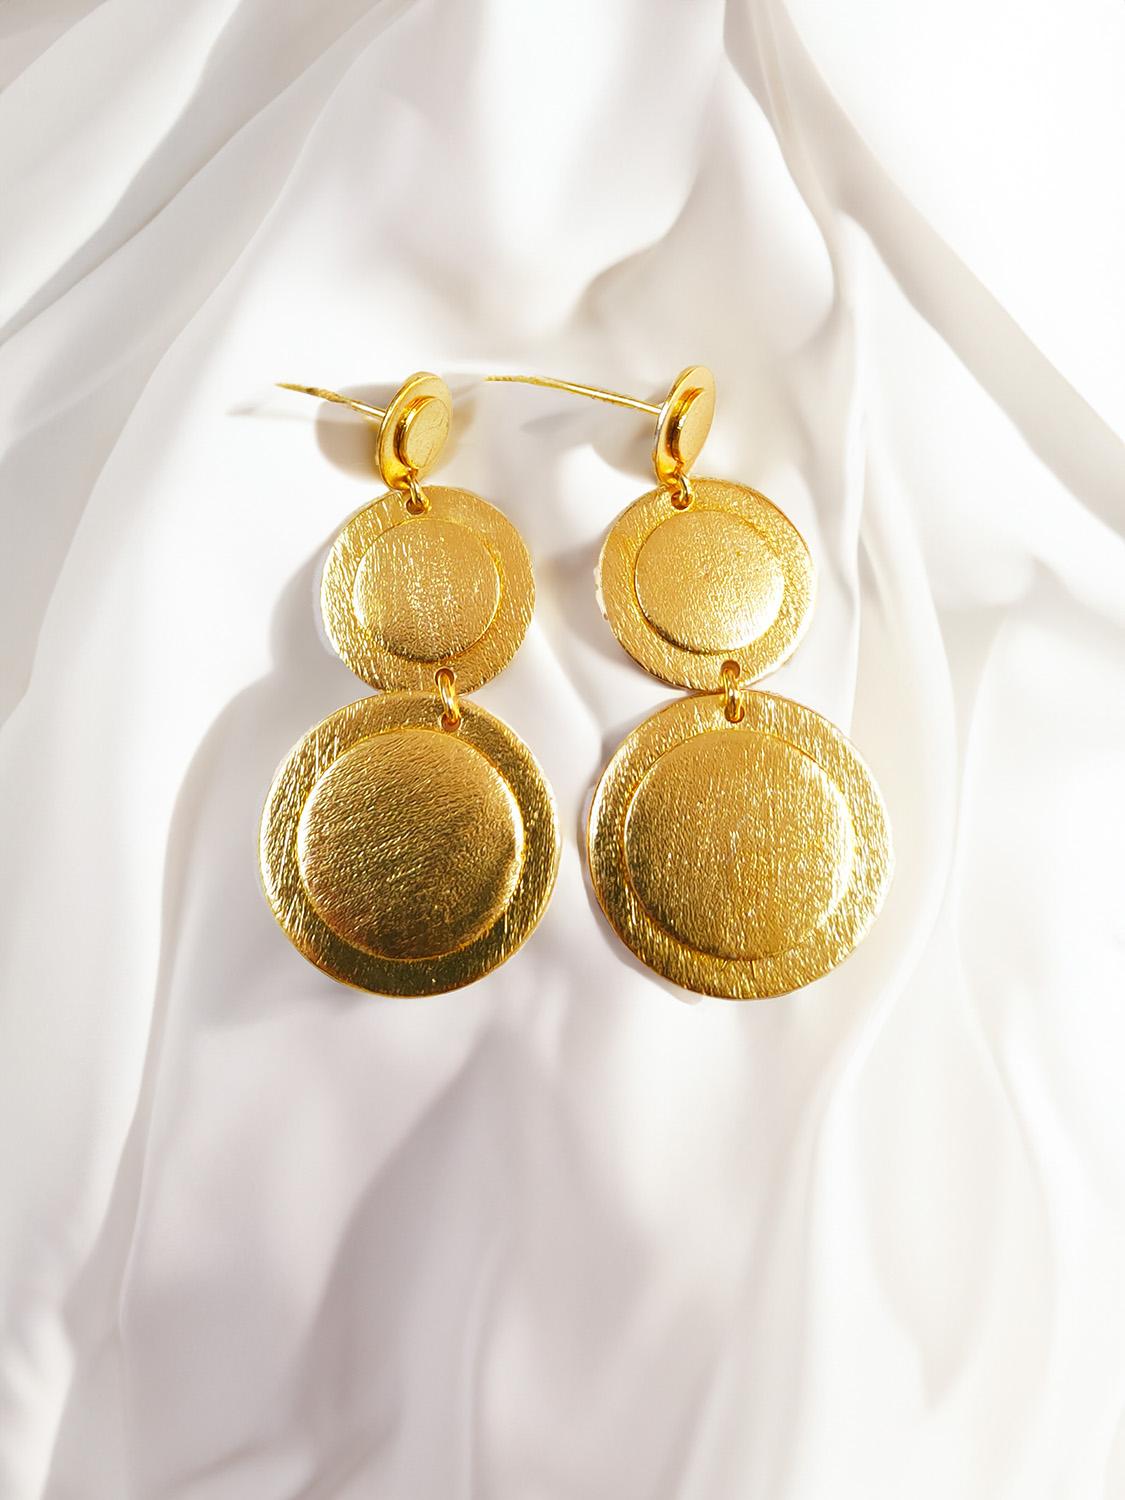 Double Circle Brass Earrings